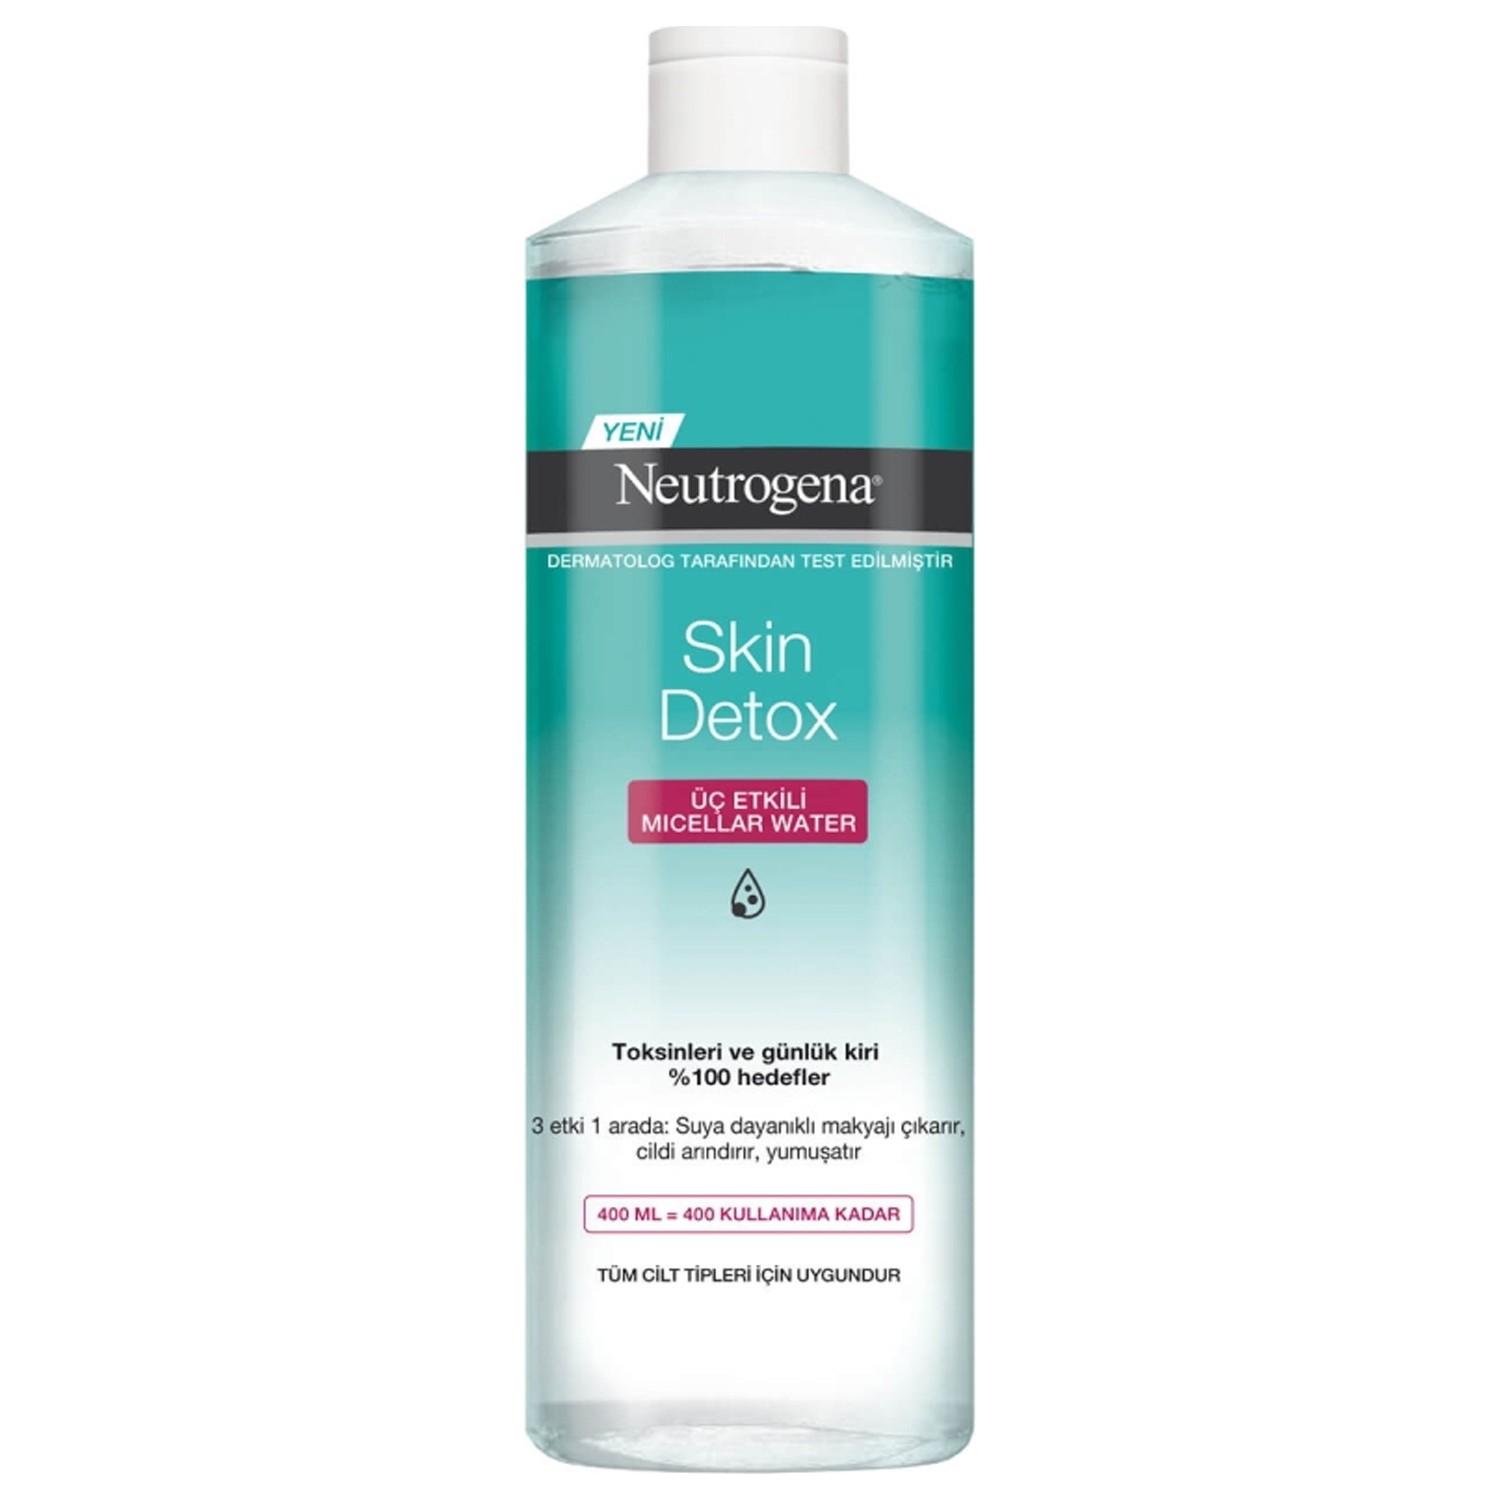 Мицеллярная вода Neutrogena Skin Detox Tip для снятия макияжа, 400 мл цена и фото